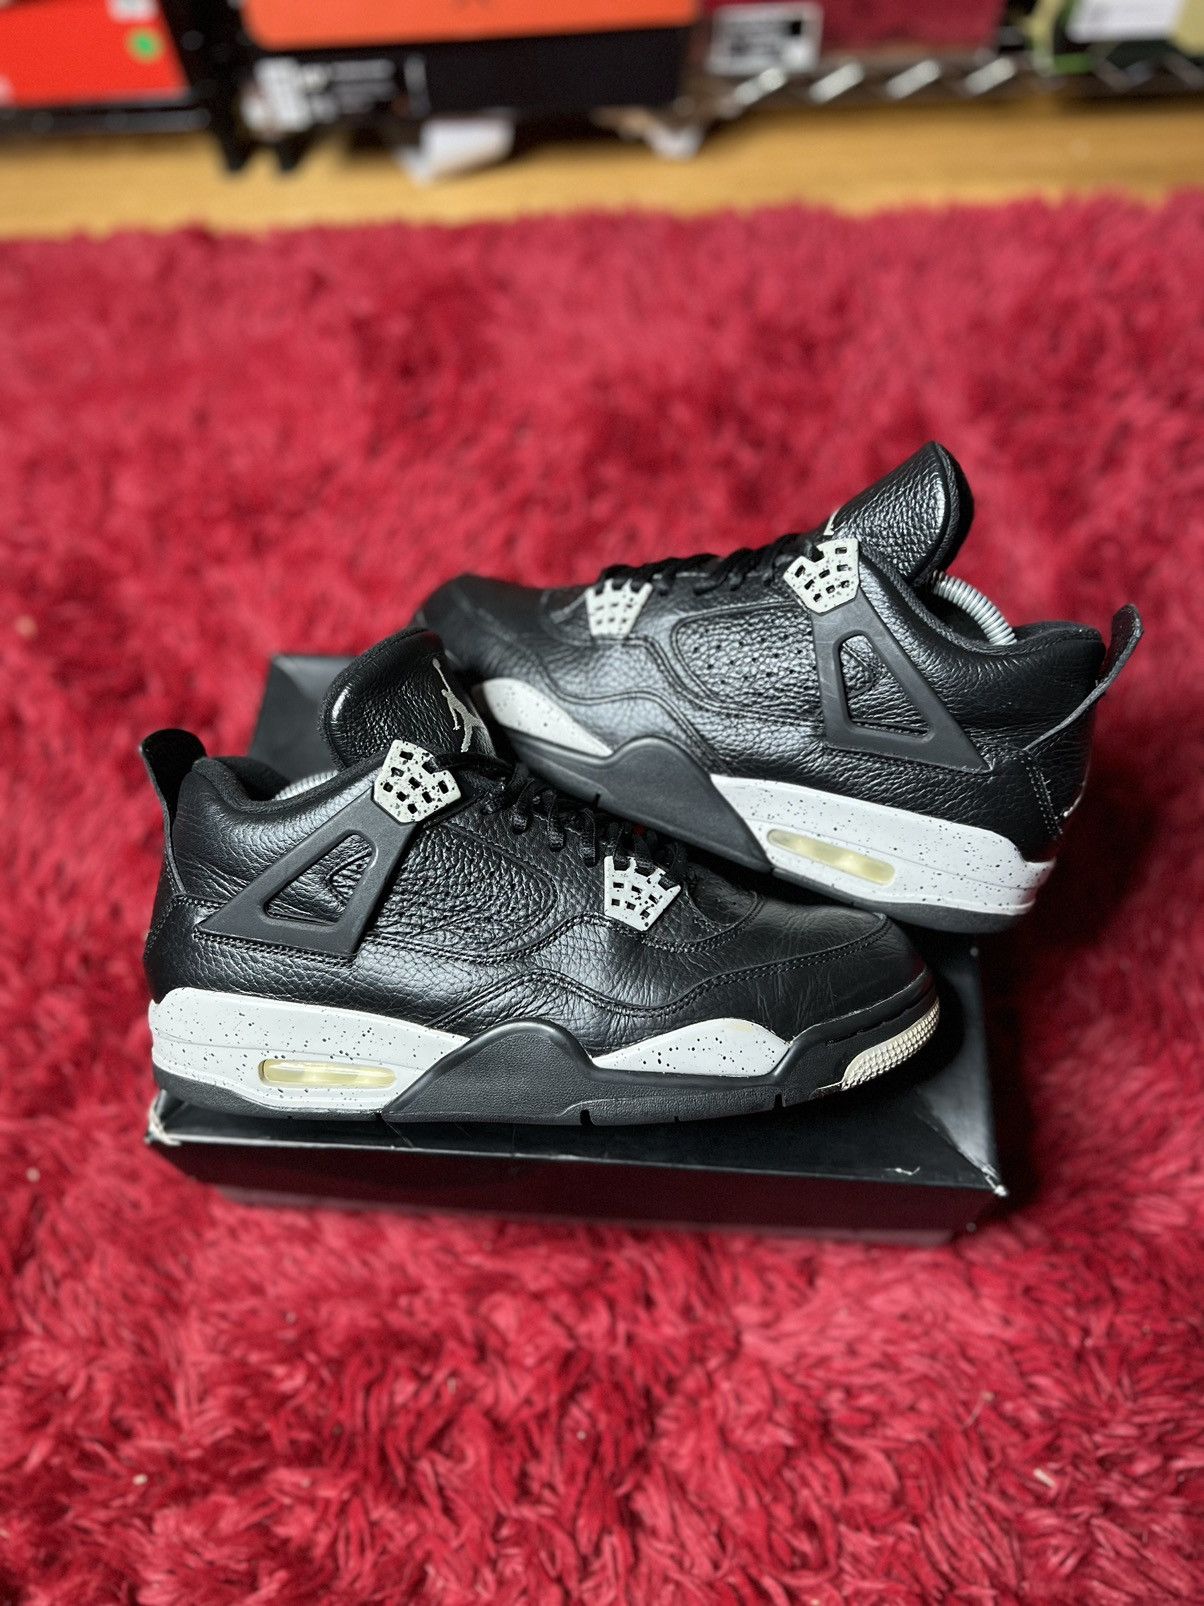 Jordan Brand Nike Air Jordan 4 Oreo 2015 | Grailed